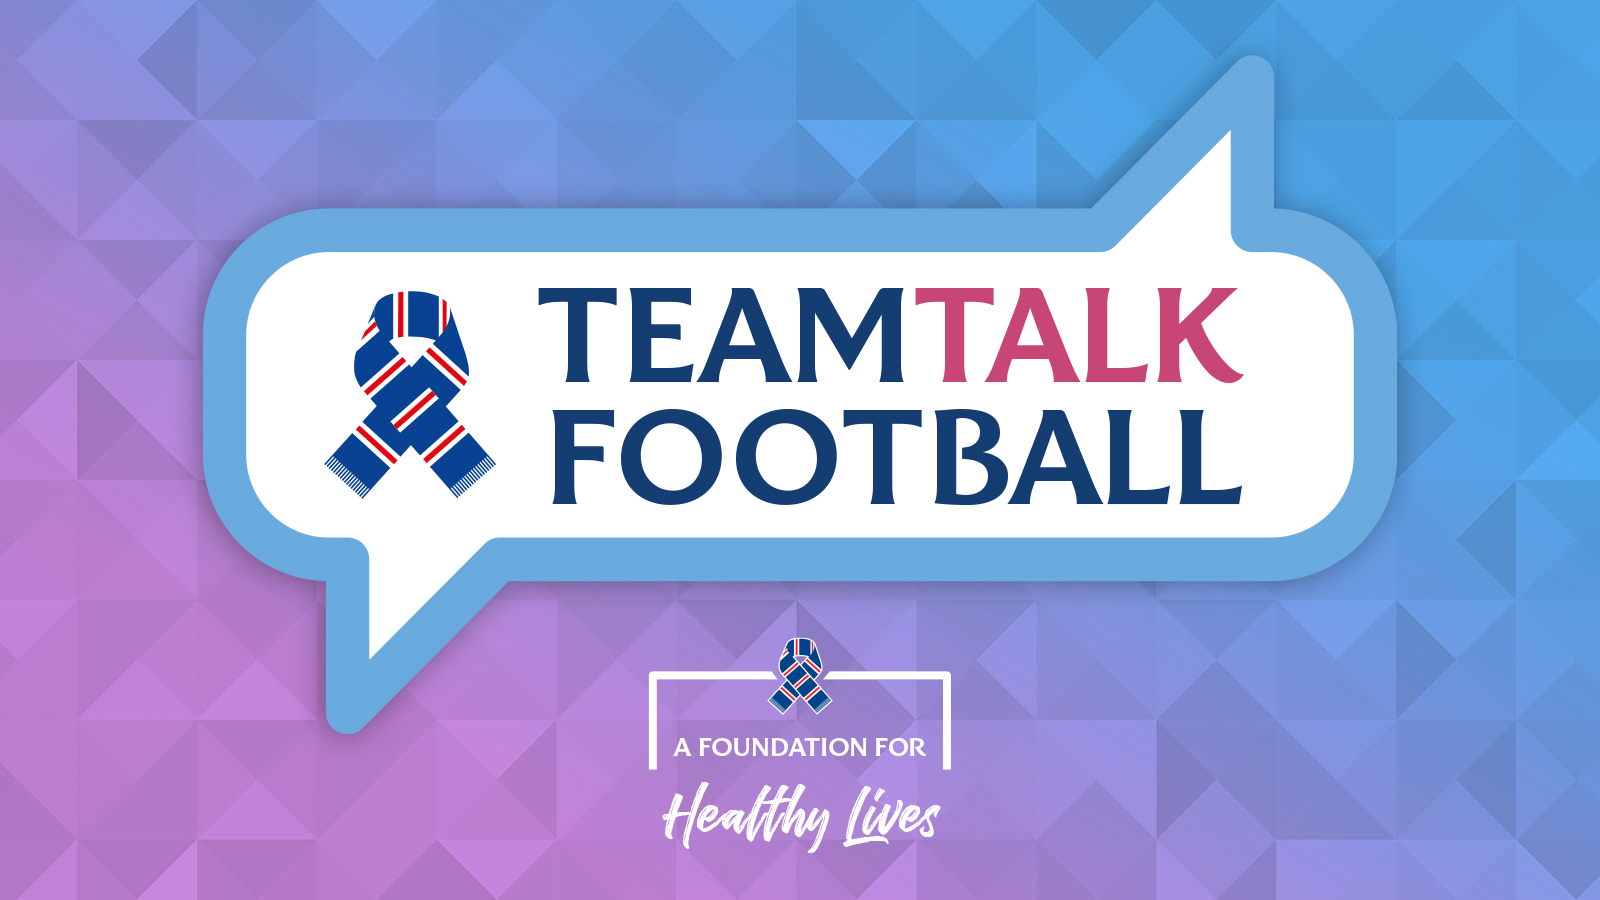 A logo with a scarf that says 'Team Talk Football'